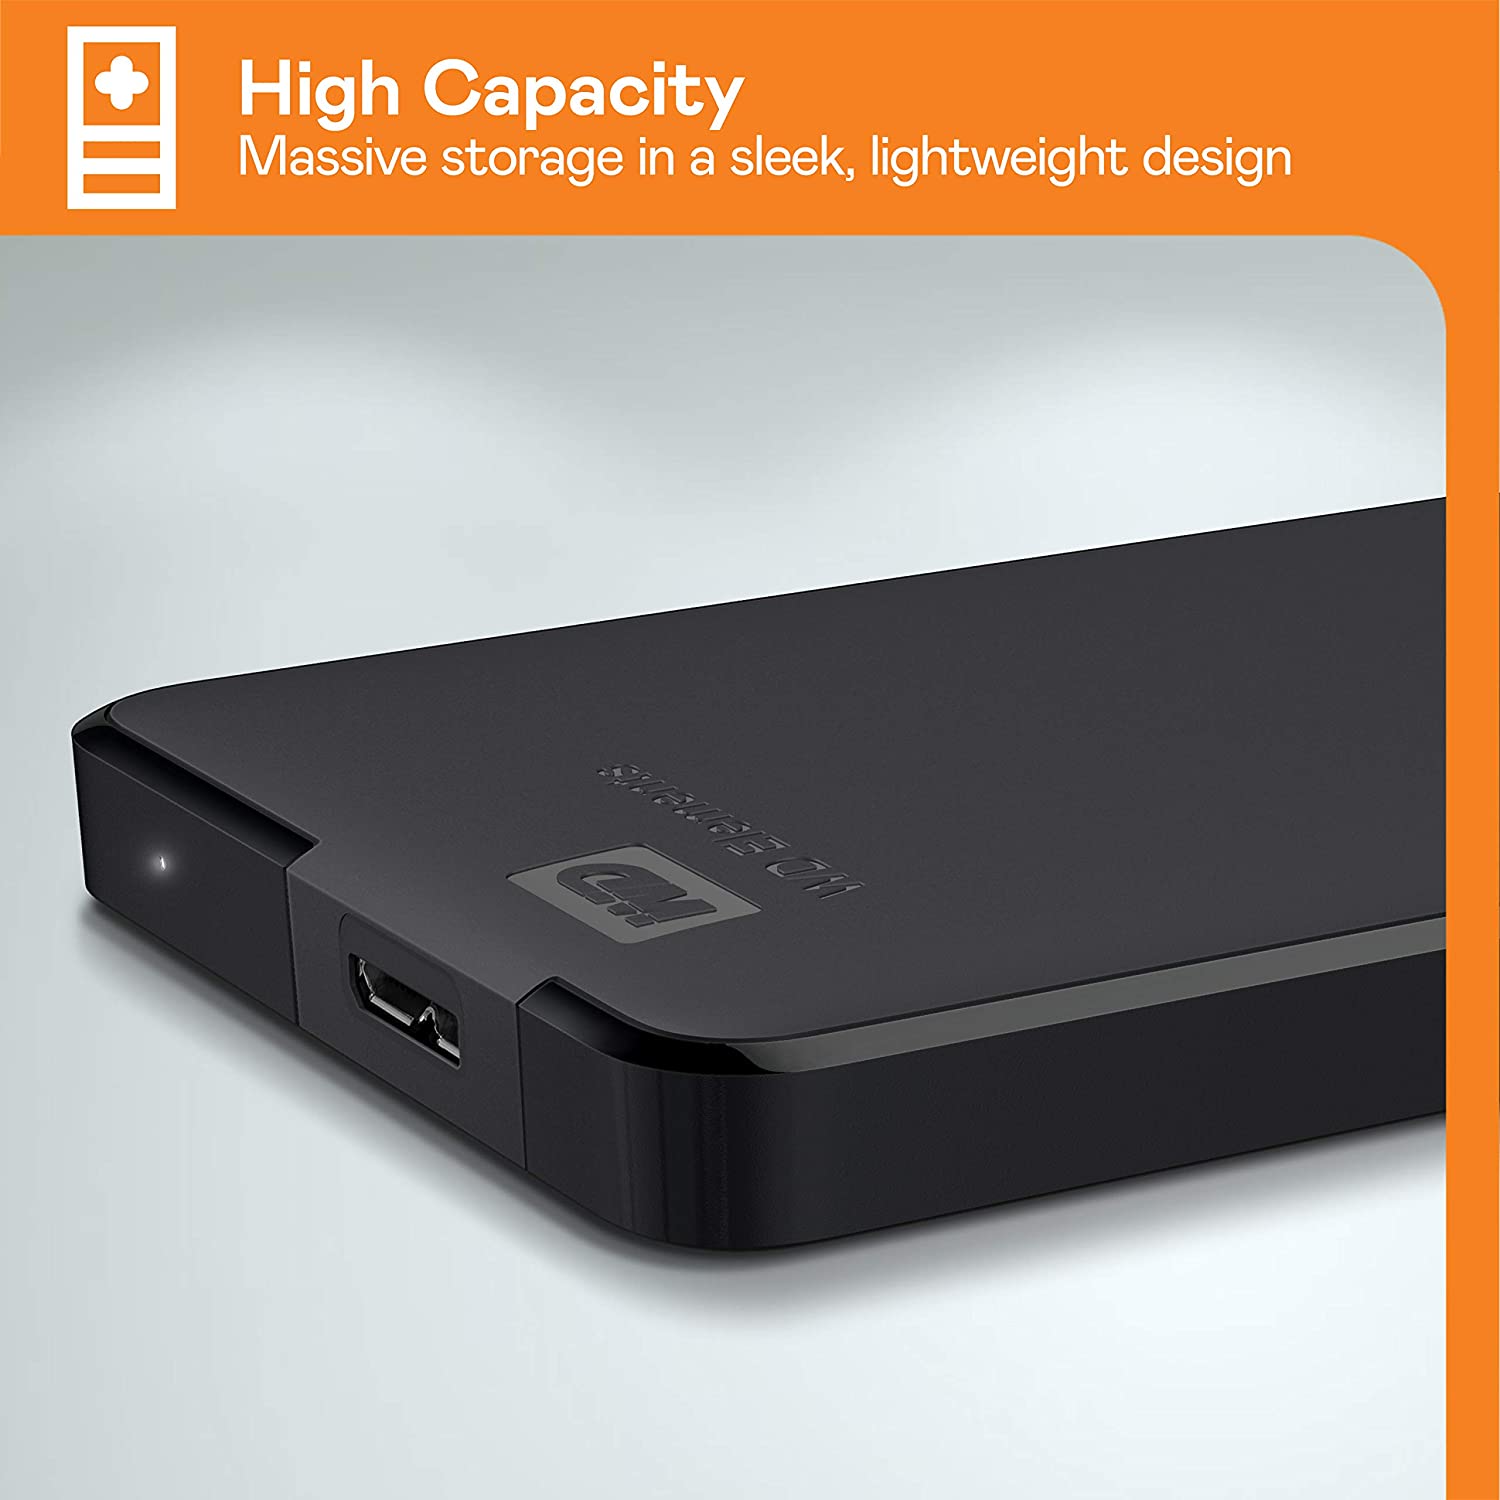 Western Digital 5 TB Elements Portable External Hard Drive - USB 3.0, Black